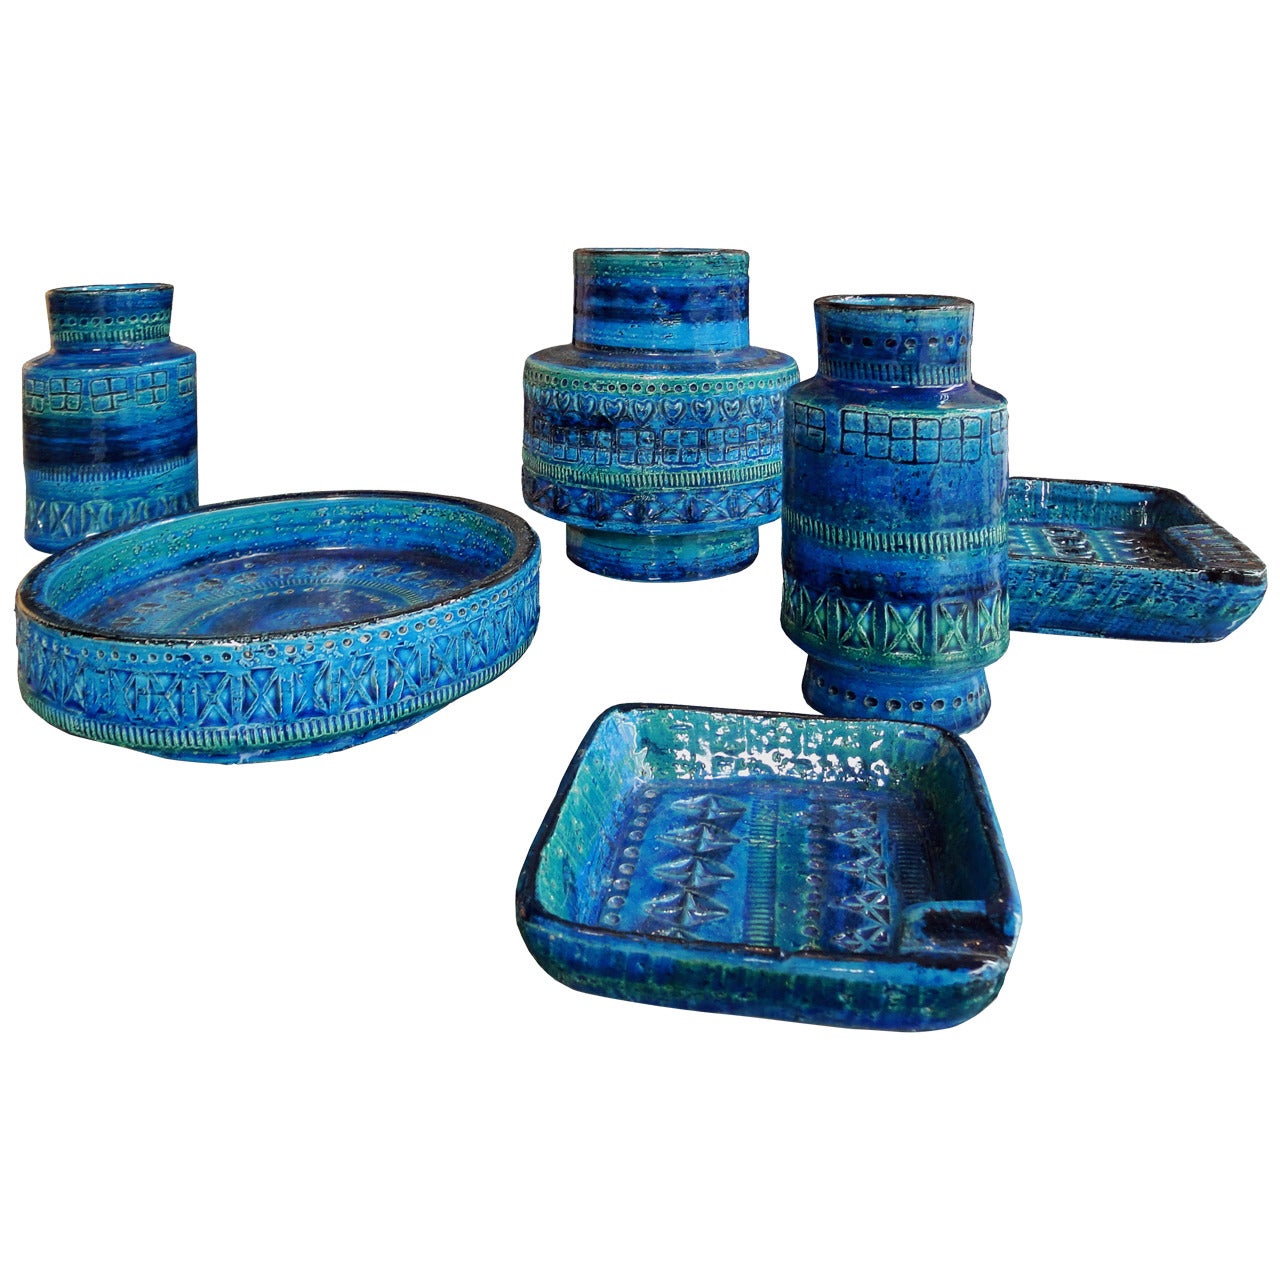 A group of Bitossi Rimini's ceramics